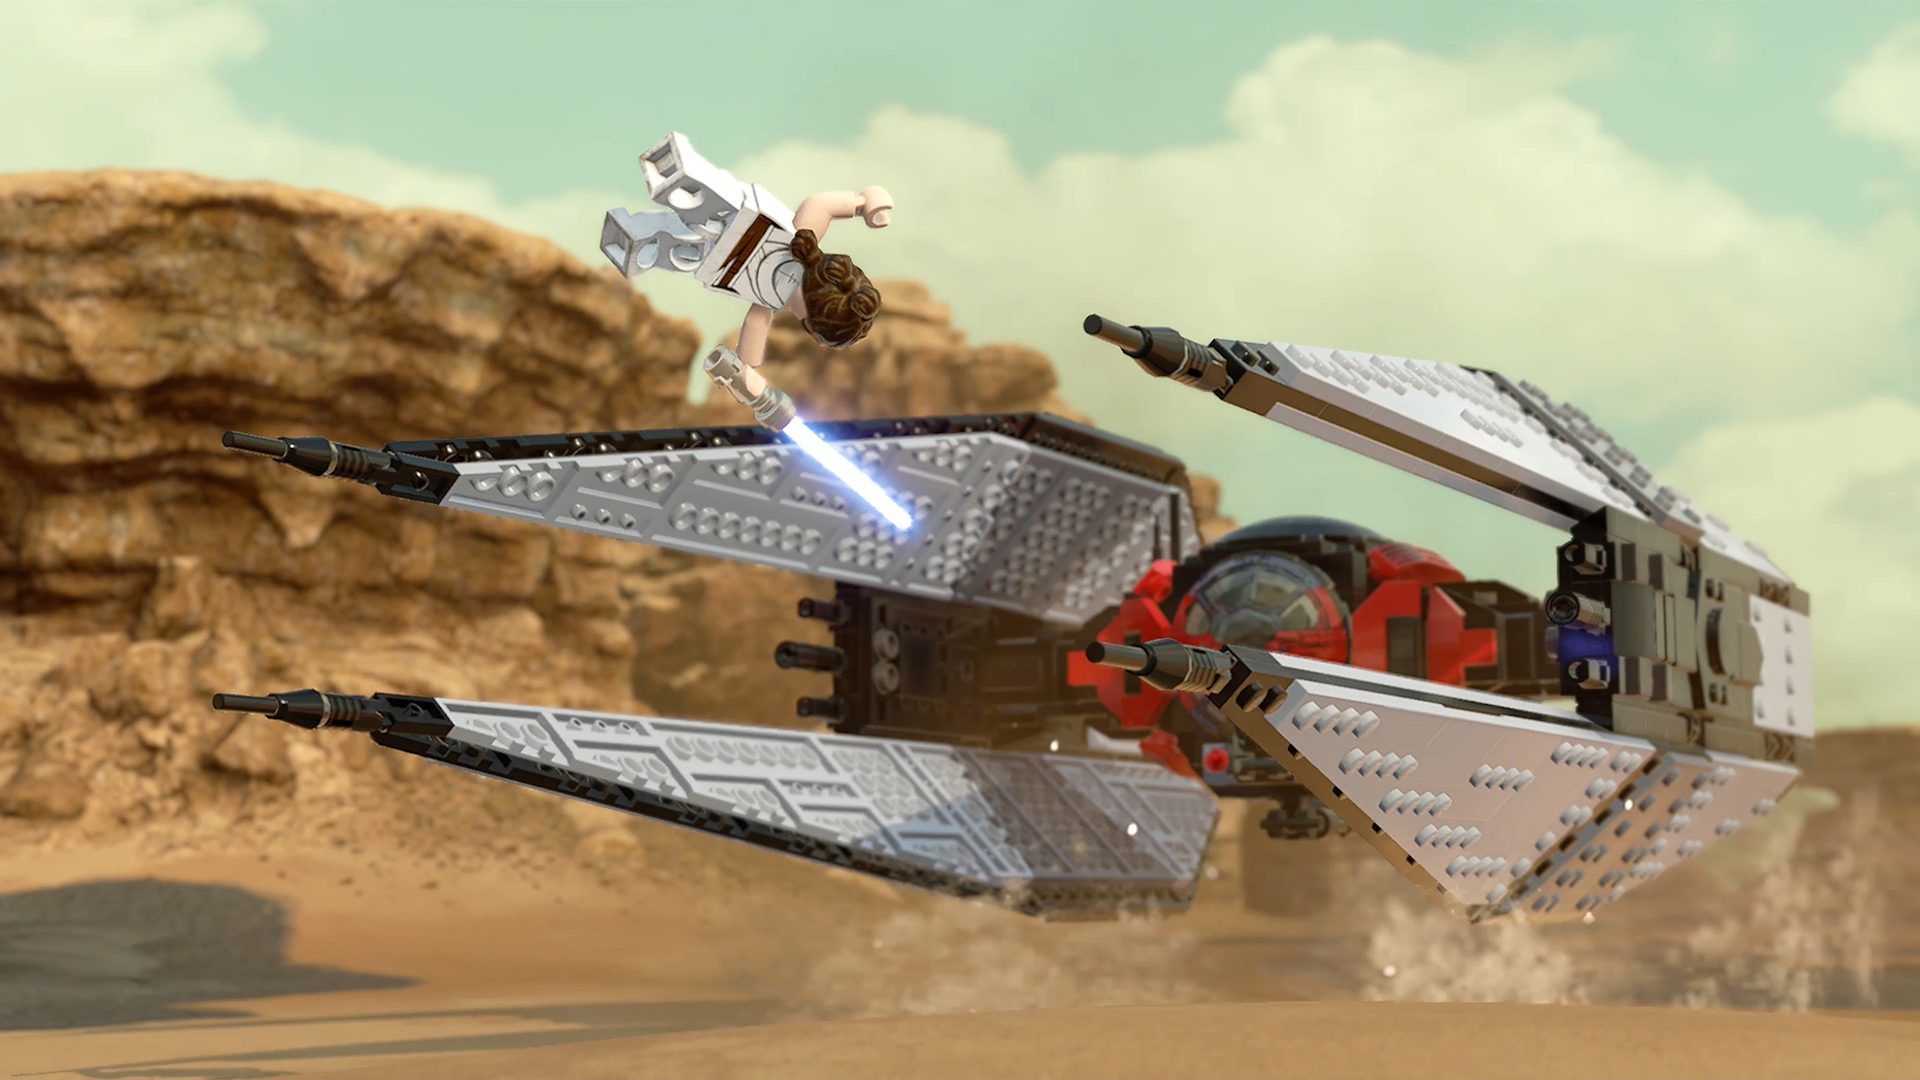 Jogo Lego Star Wars The Skywalker para PS4